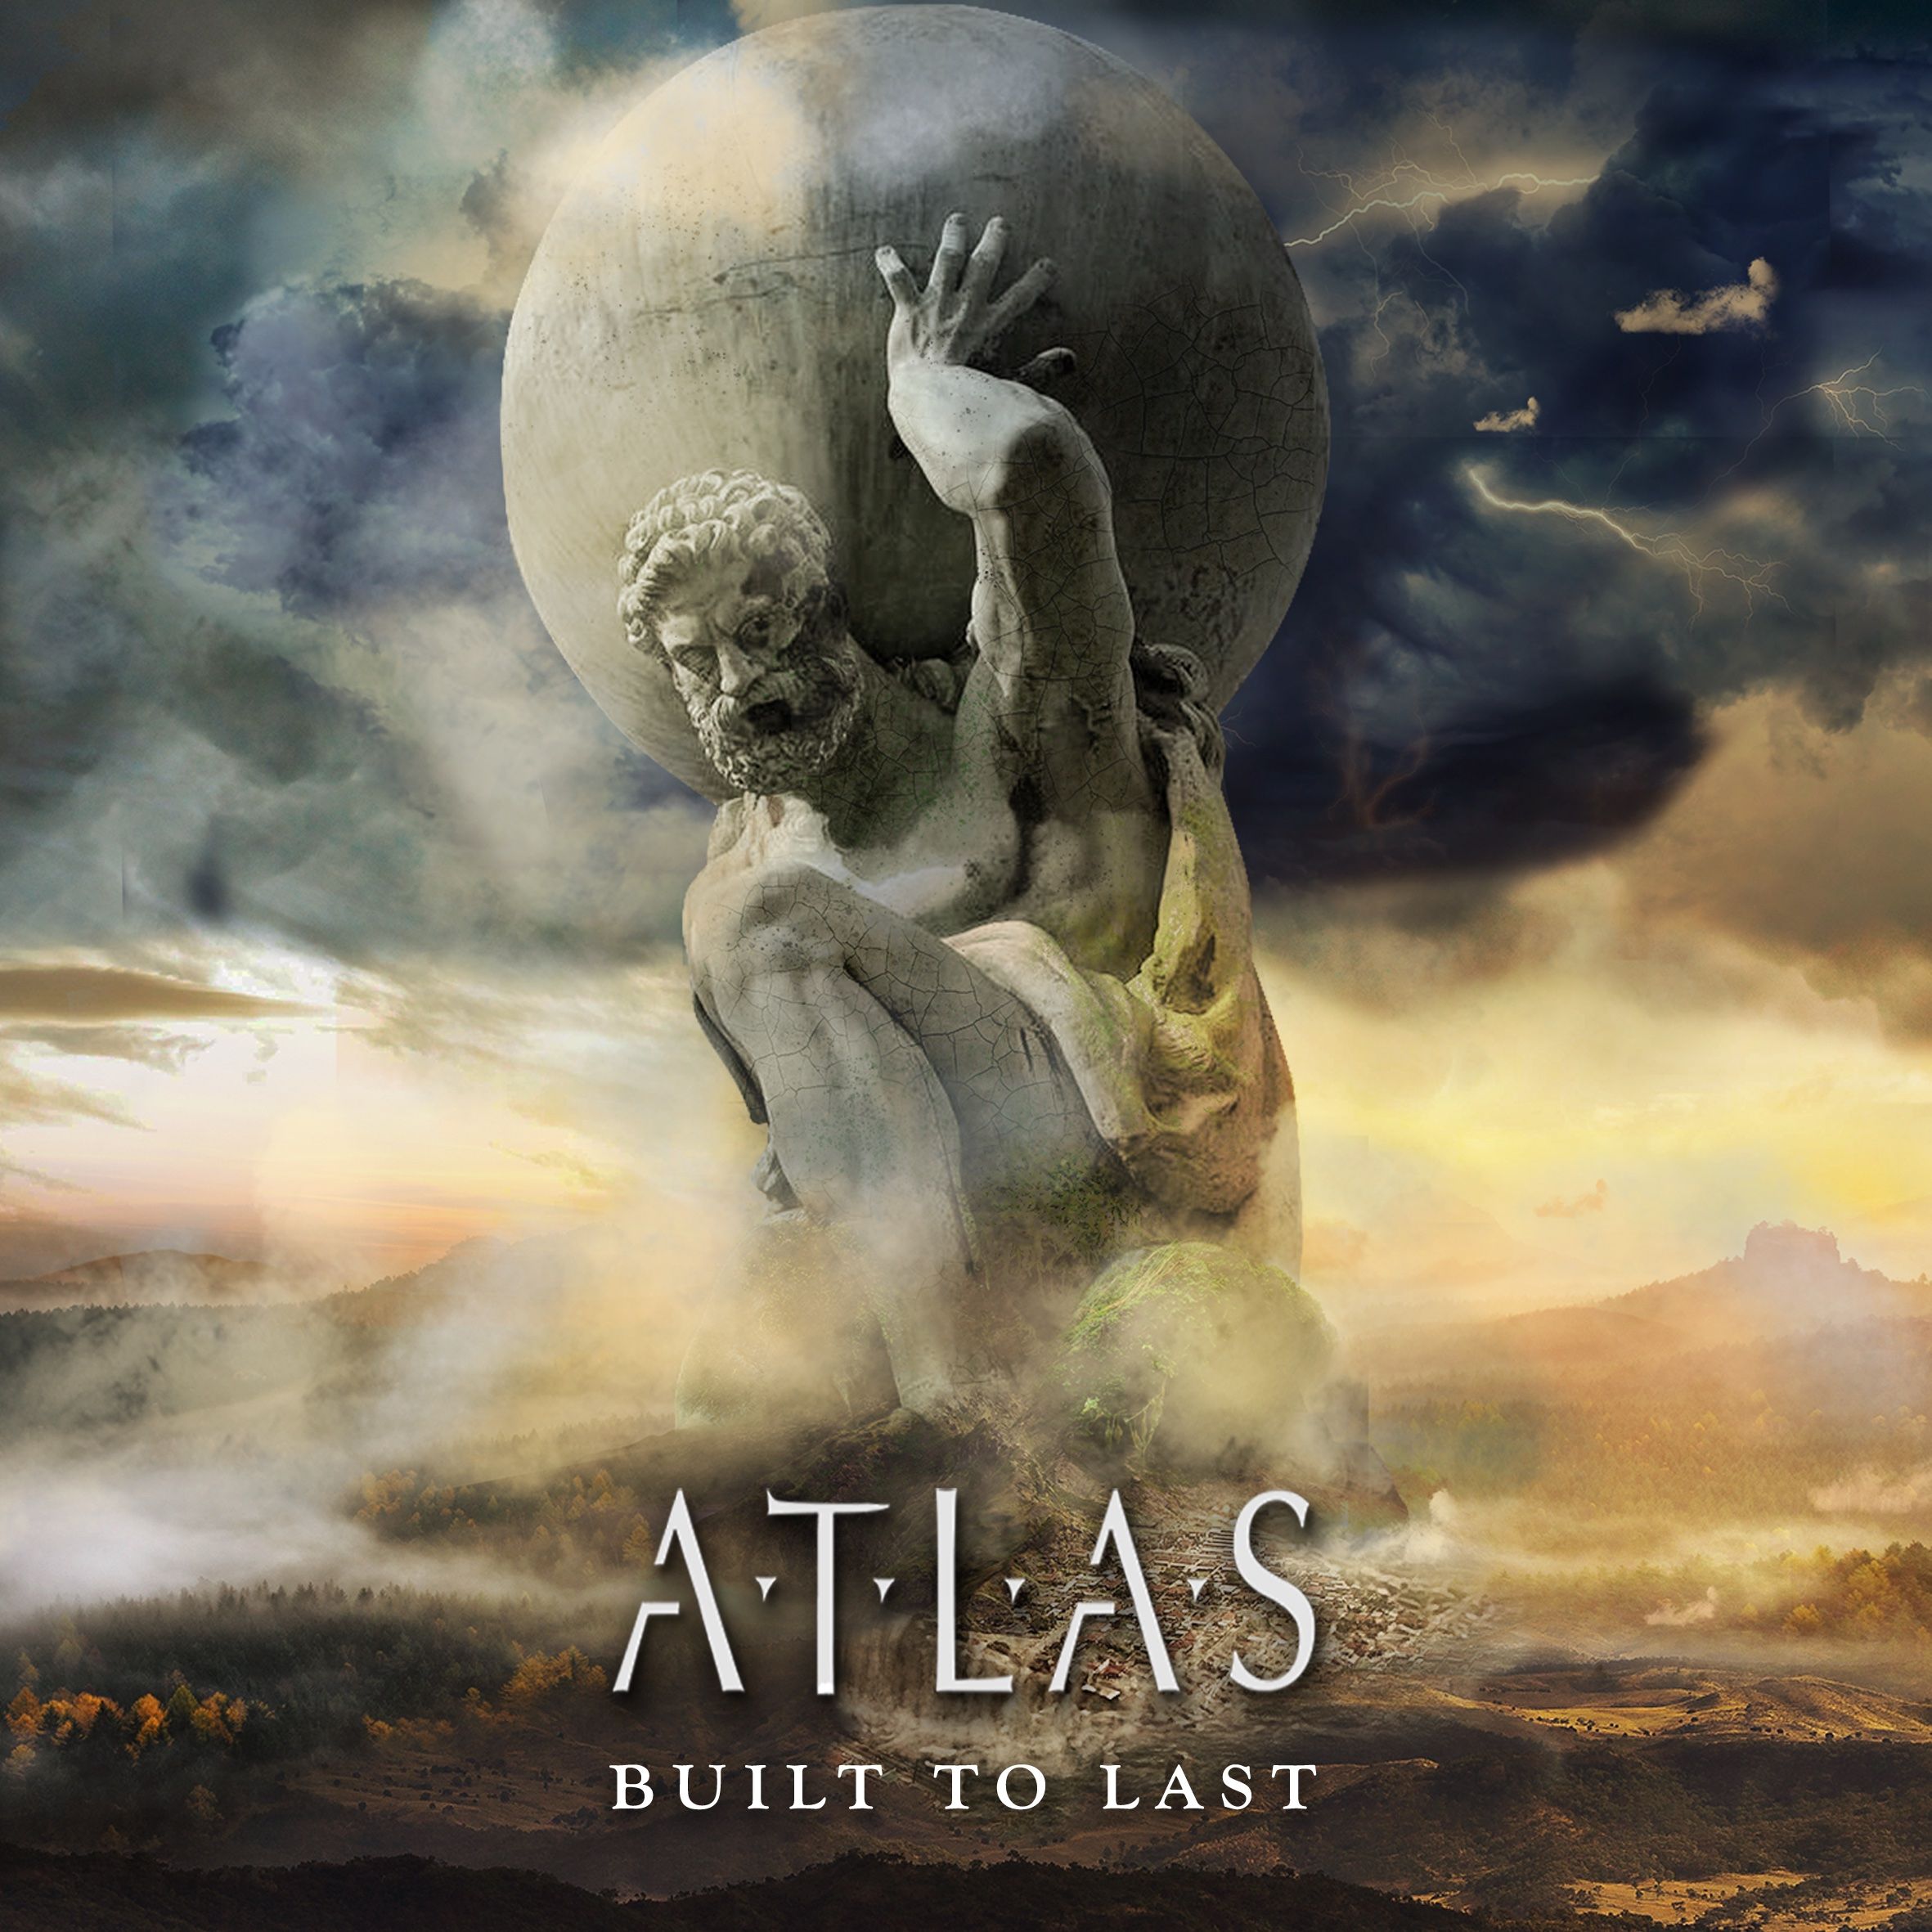 ATLAS Announce New Album “Built To Last”